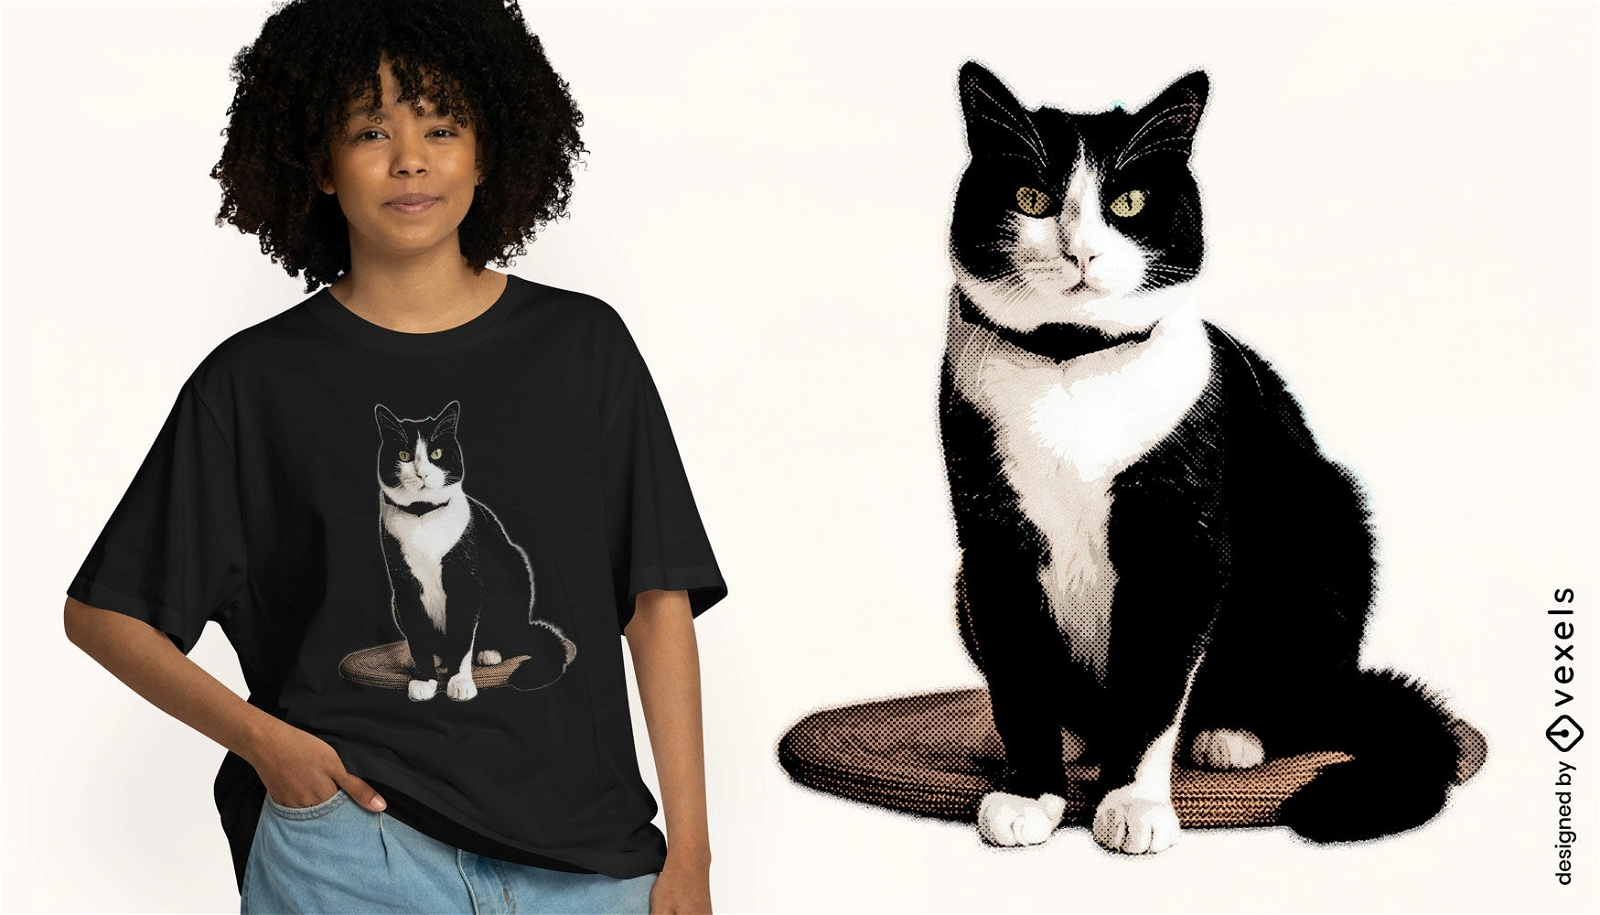 Tuxedo cat t-shirt design